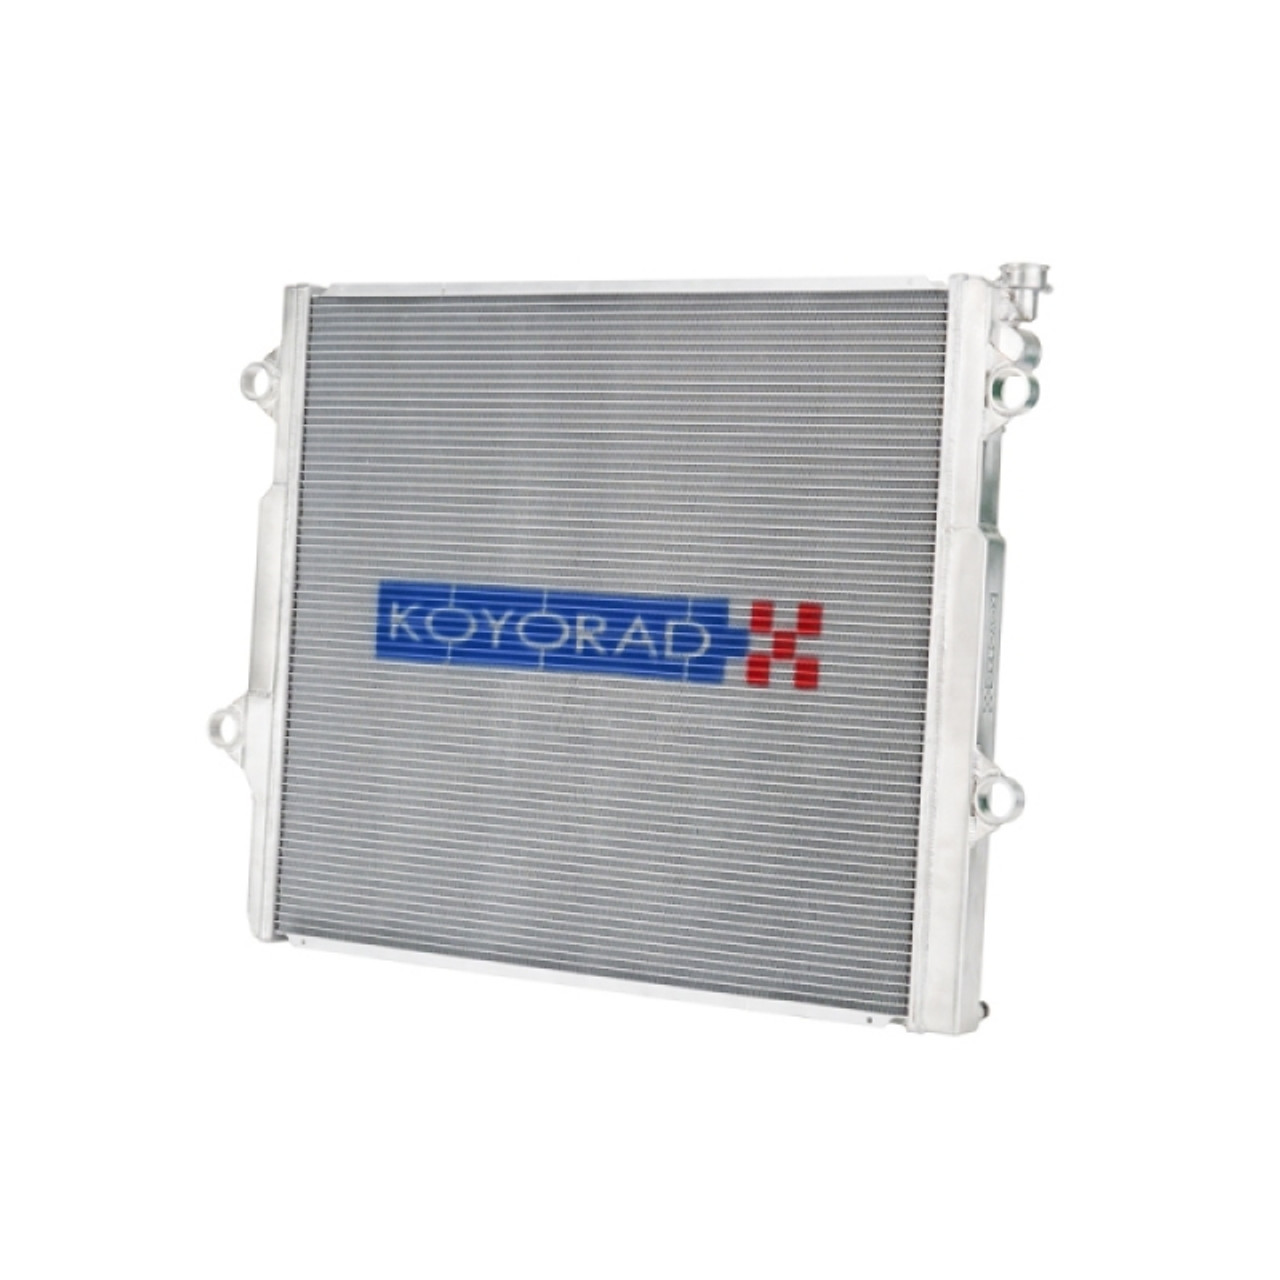 Koyorad 03-09 Toyota 4Runner/Lexus GX470 4.7l Aluminum Radiator - Off-Road Use Only - VH011703N User 1